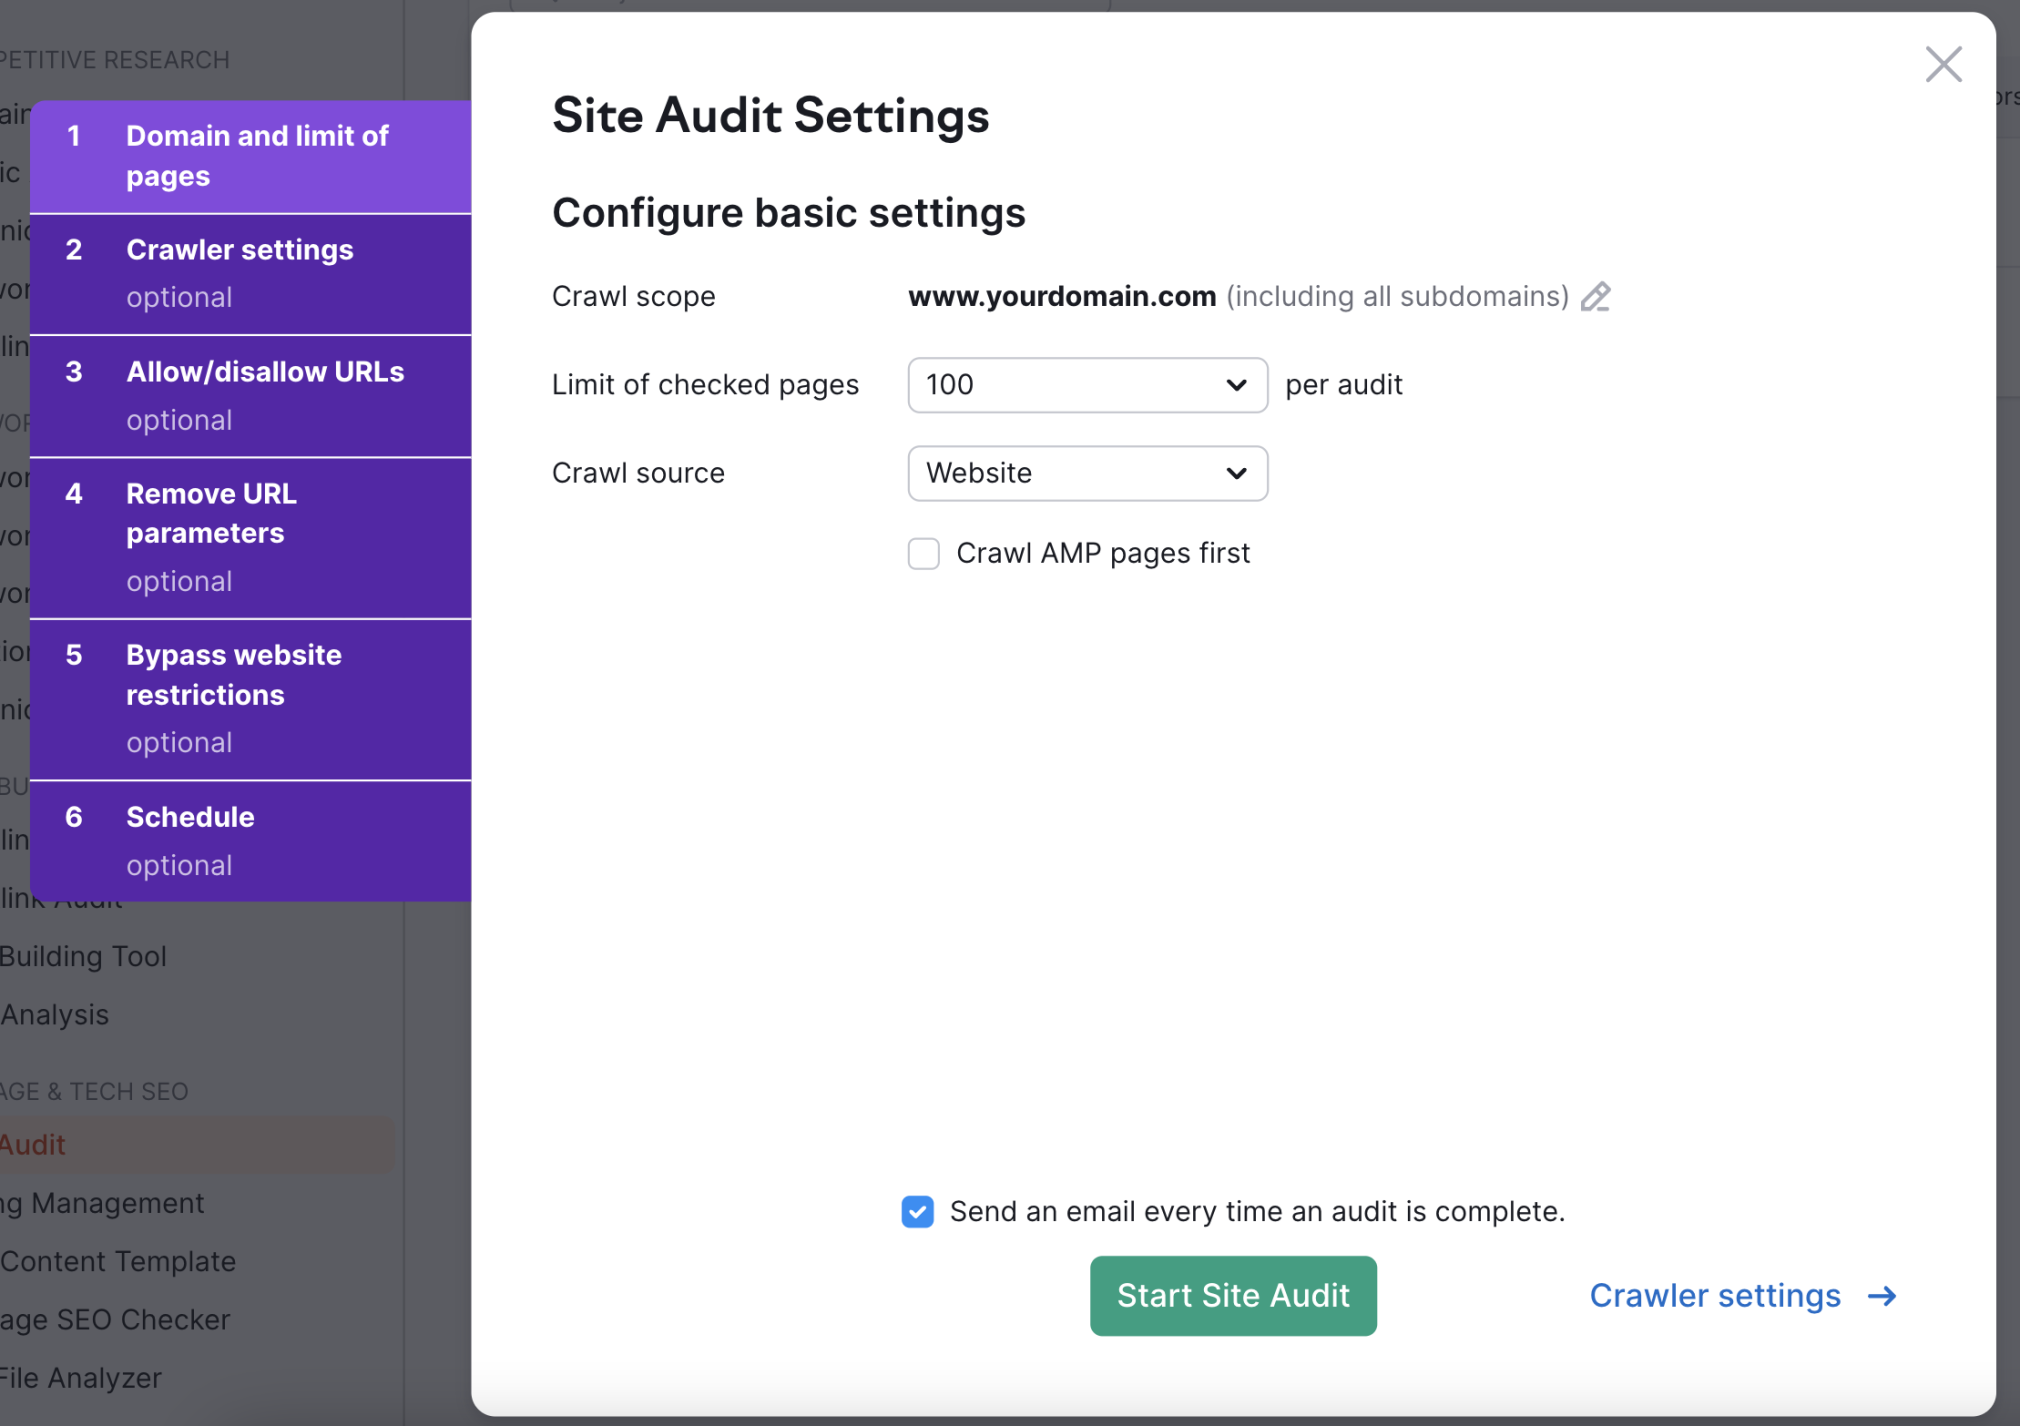 site audit settings window